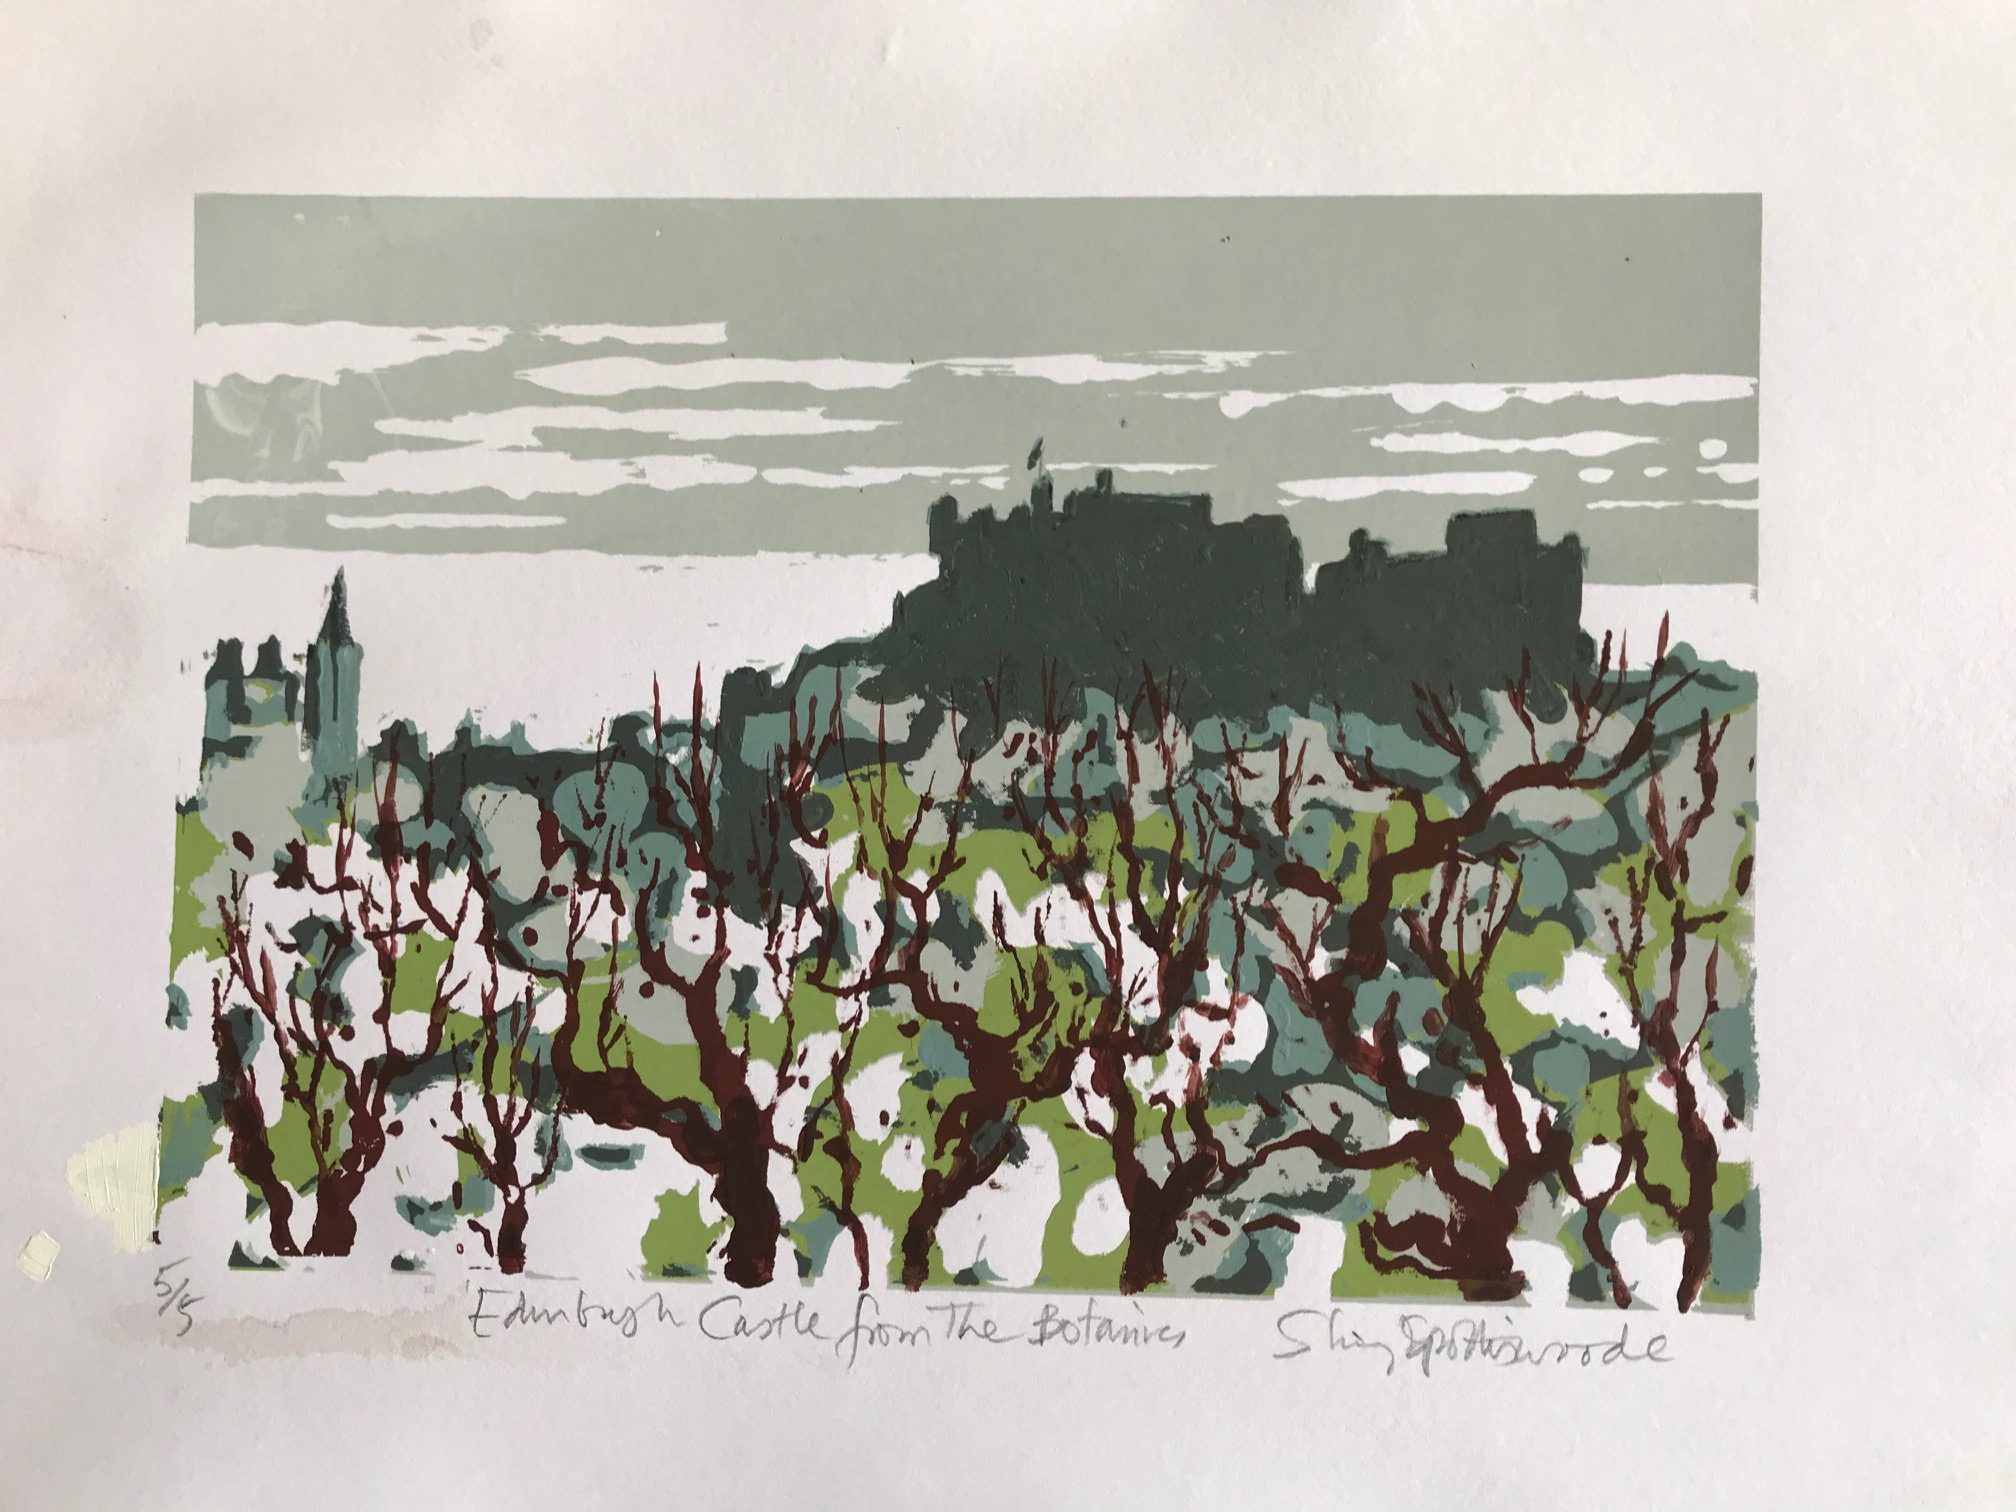 Edinburgh Castle from the Botanics (Shirley Spottiswoode